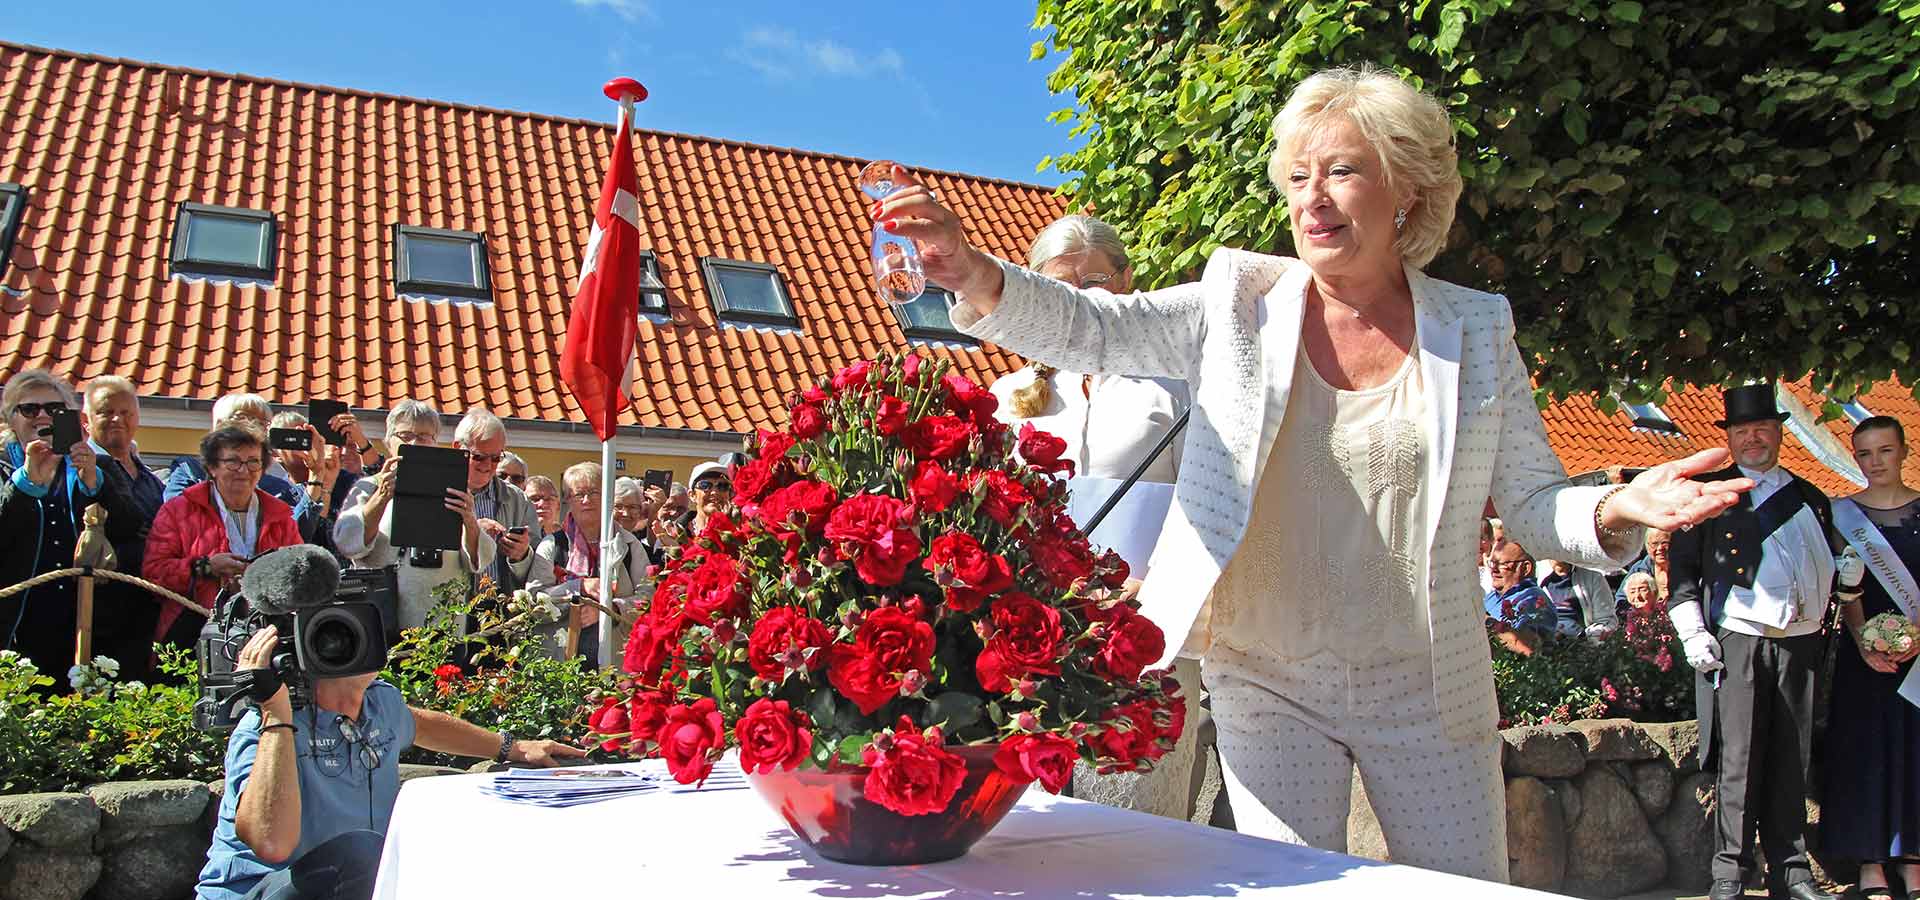 Birthe Kjær døber roserne i champagne til Rosenfestival sommeren 2017